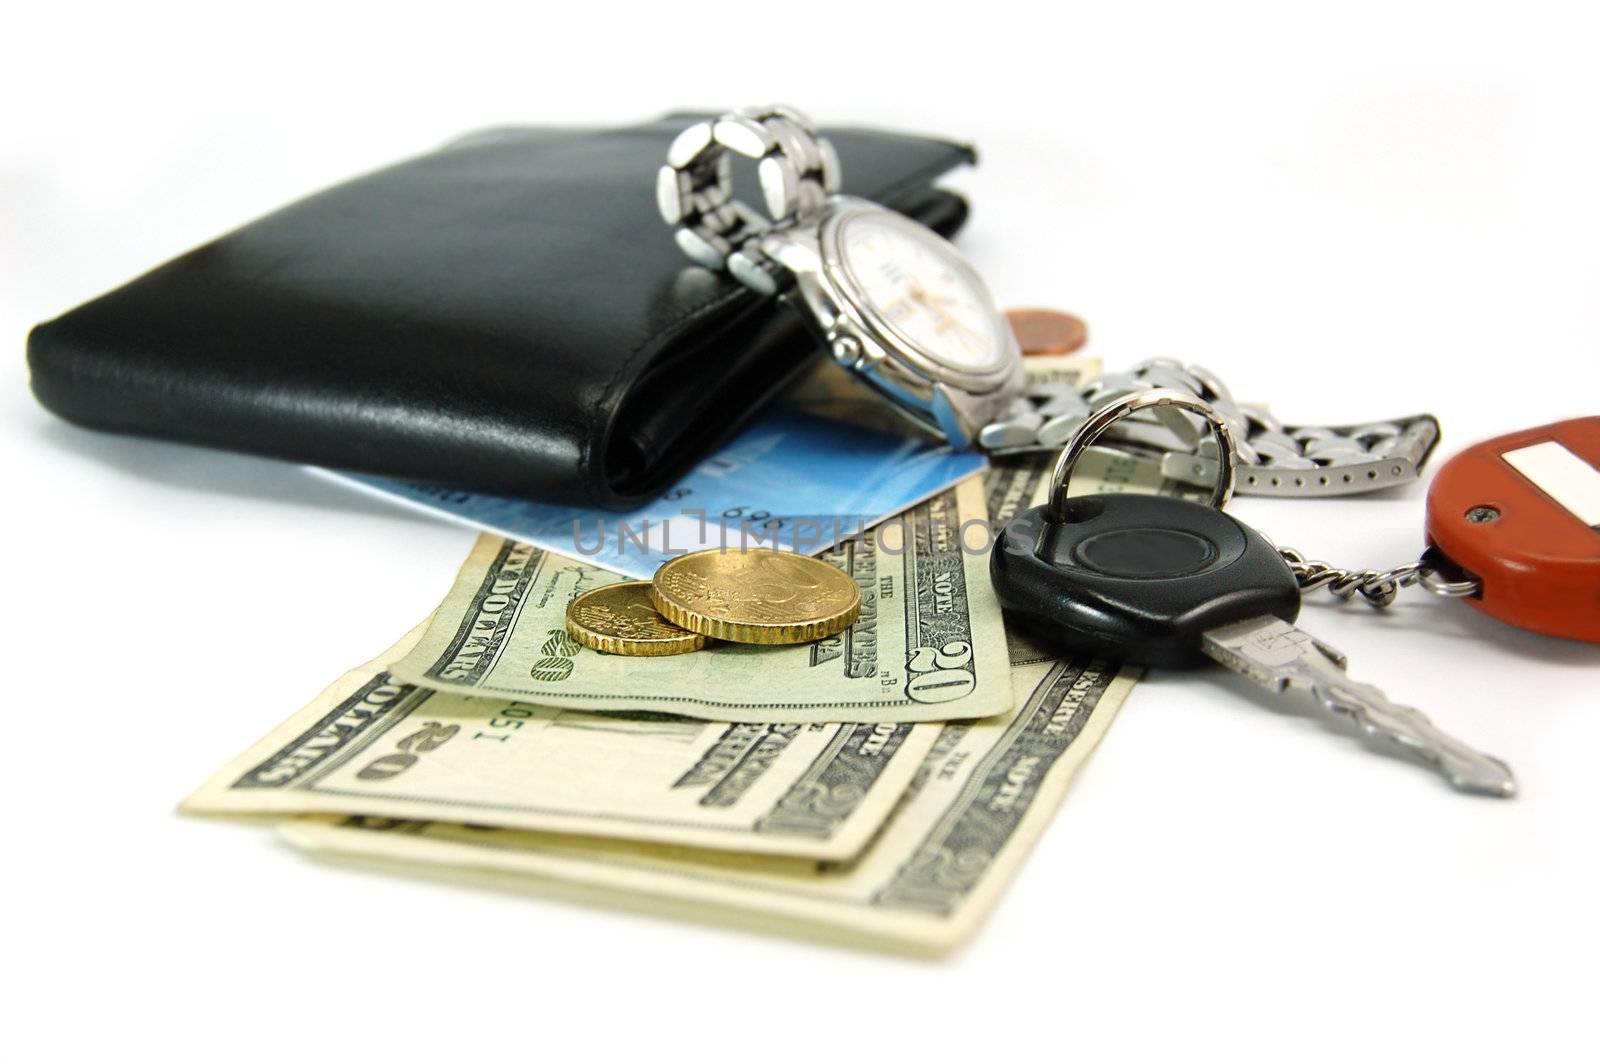 black wallet, card, cents, dollars and car keys